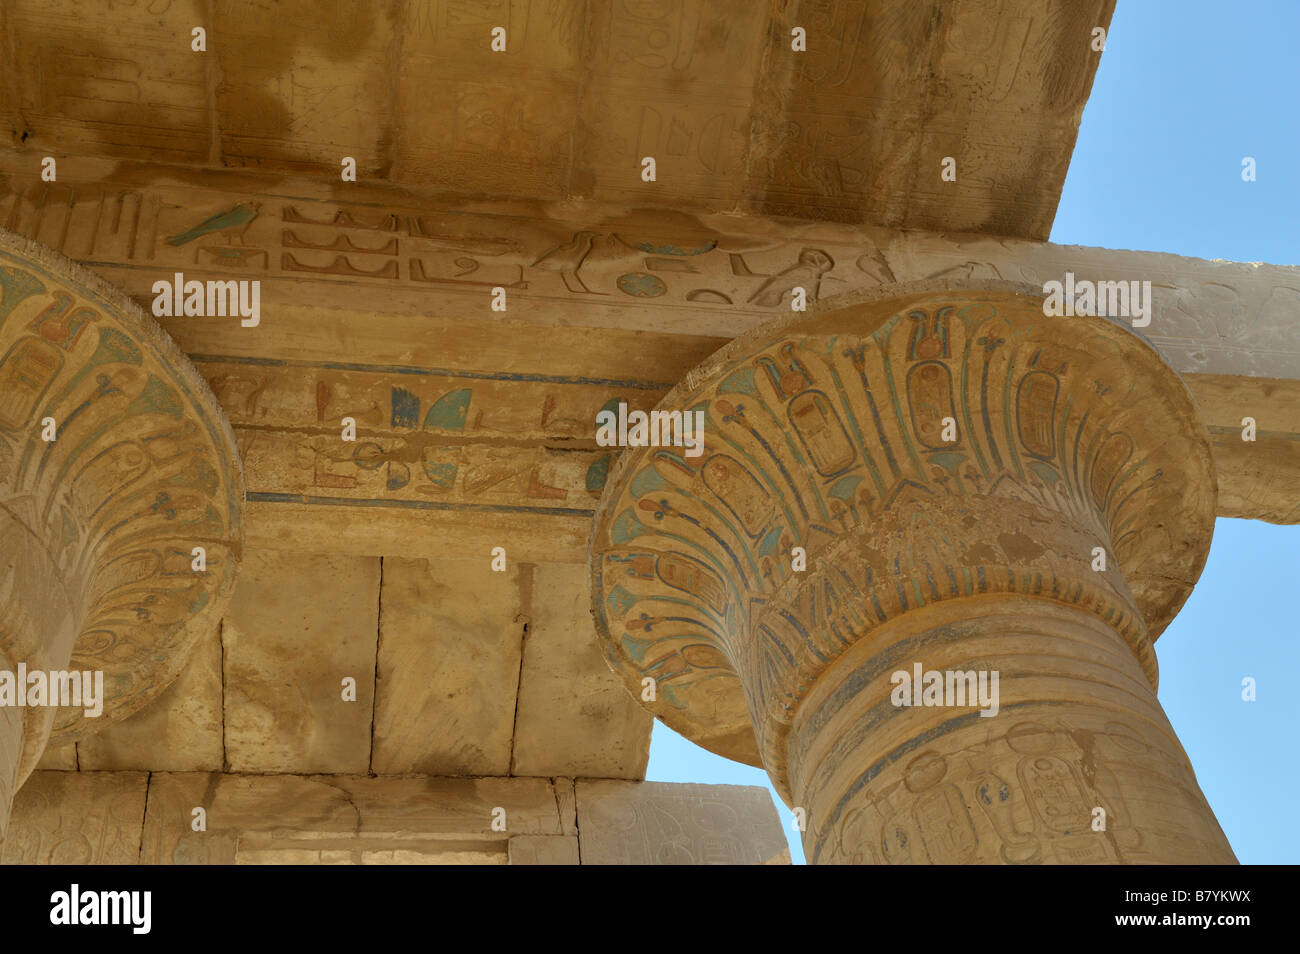 Columns, capitals, Hypostyle hall, Ramses ii, Ramesseum, Luxor, Egypt 081119 33048 Stock Photo